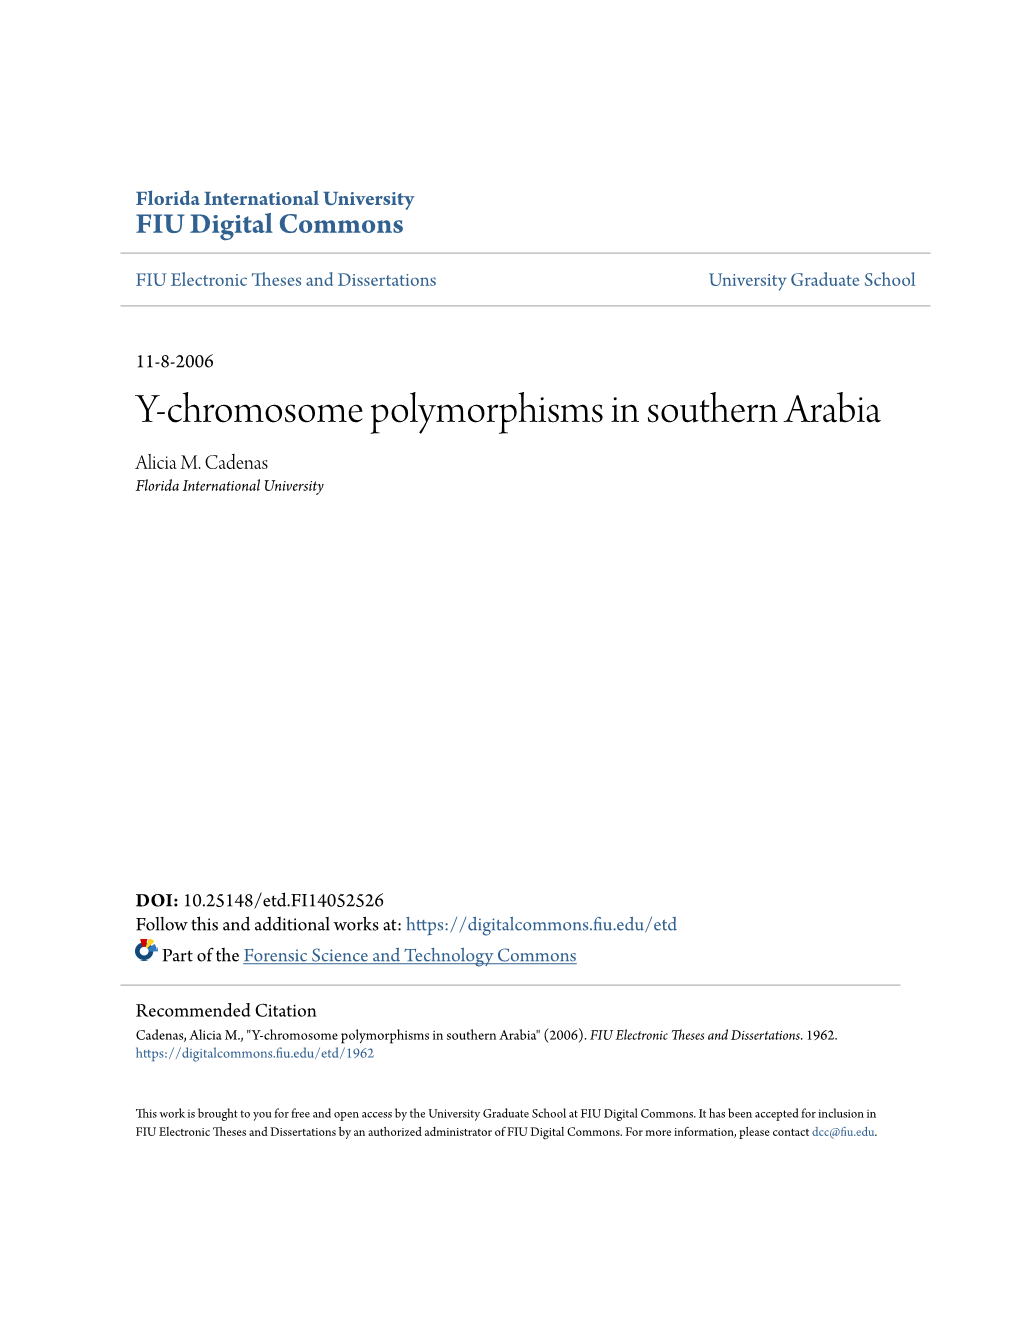 Y-Chromosome Polymorphisms in Southern Arabia Alicia M